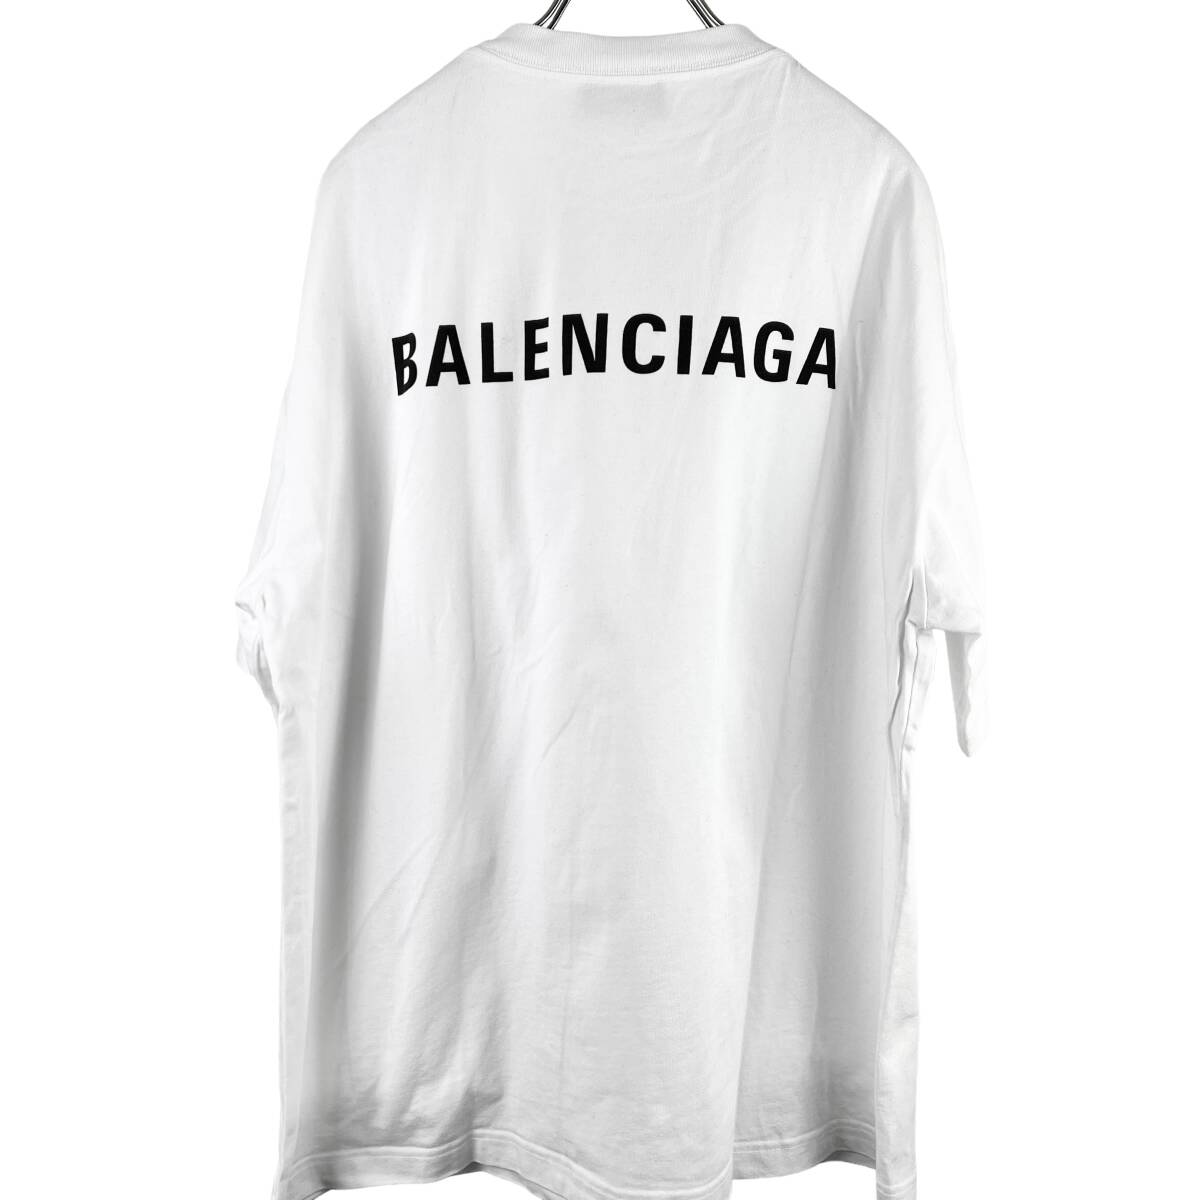 Balenciaga(バレンシアガ) Back Logo Shortsleeve T Shirt (white)